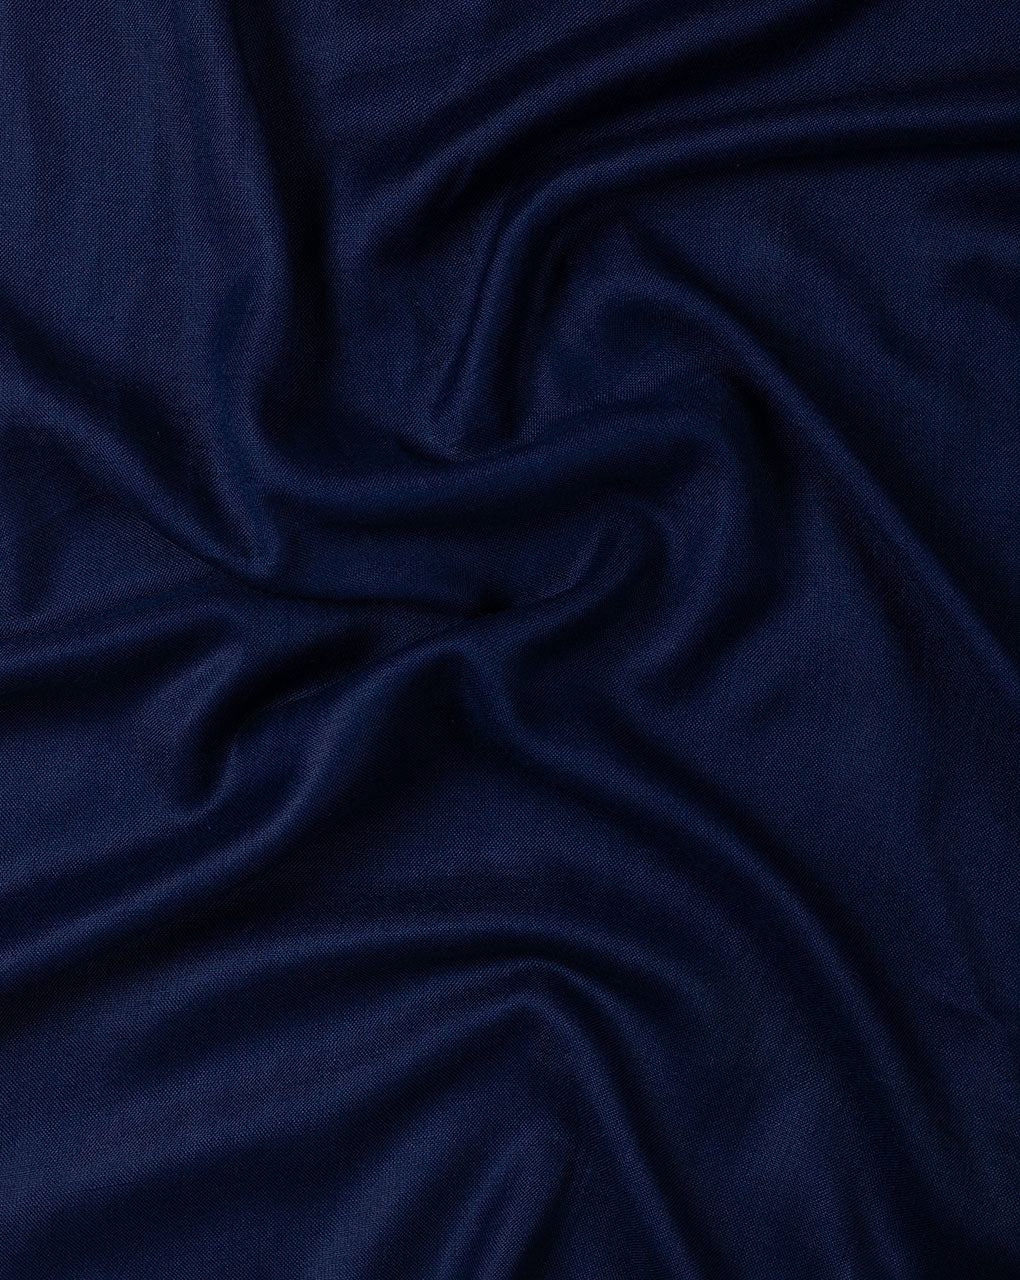 Blue Plain Woven Bhagalpuri Viscose Stole - Fabriclore.com